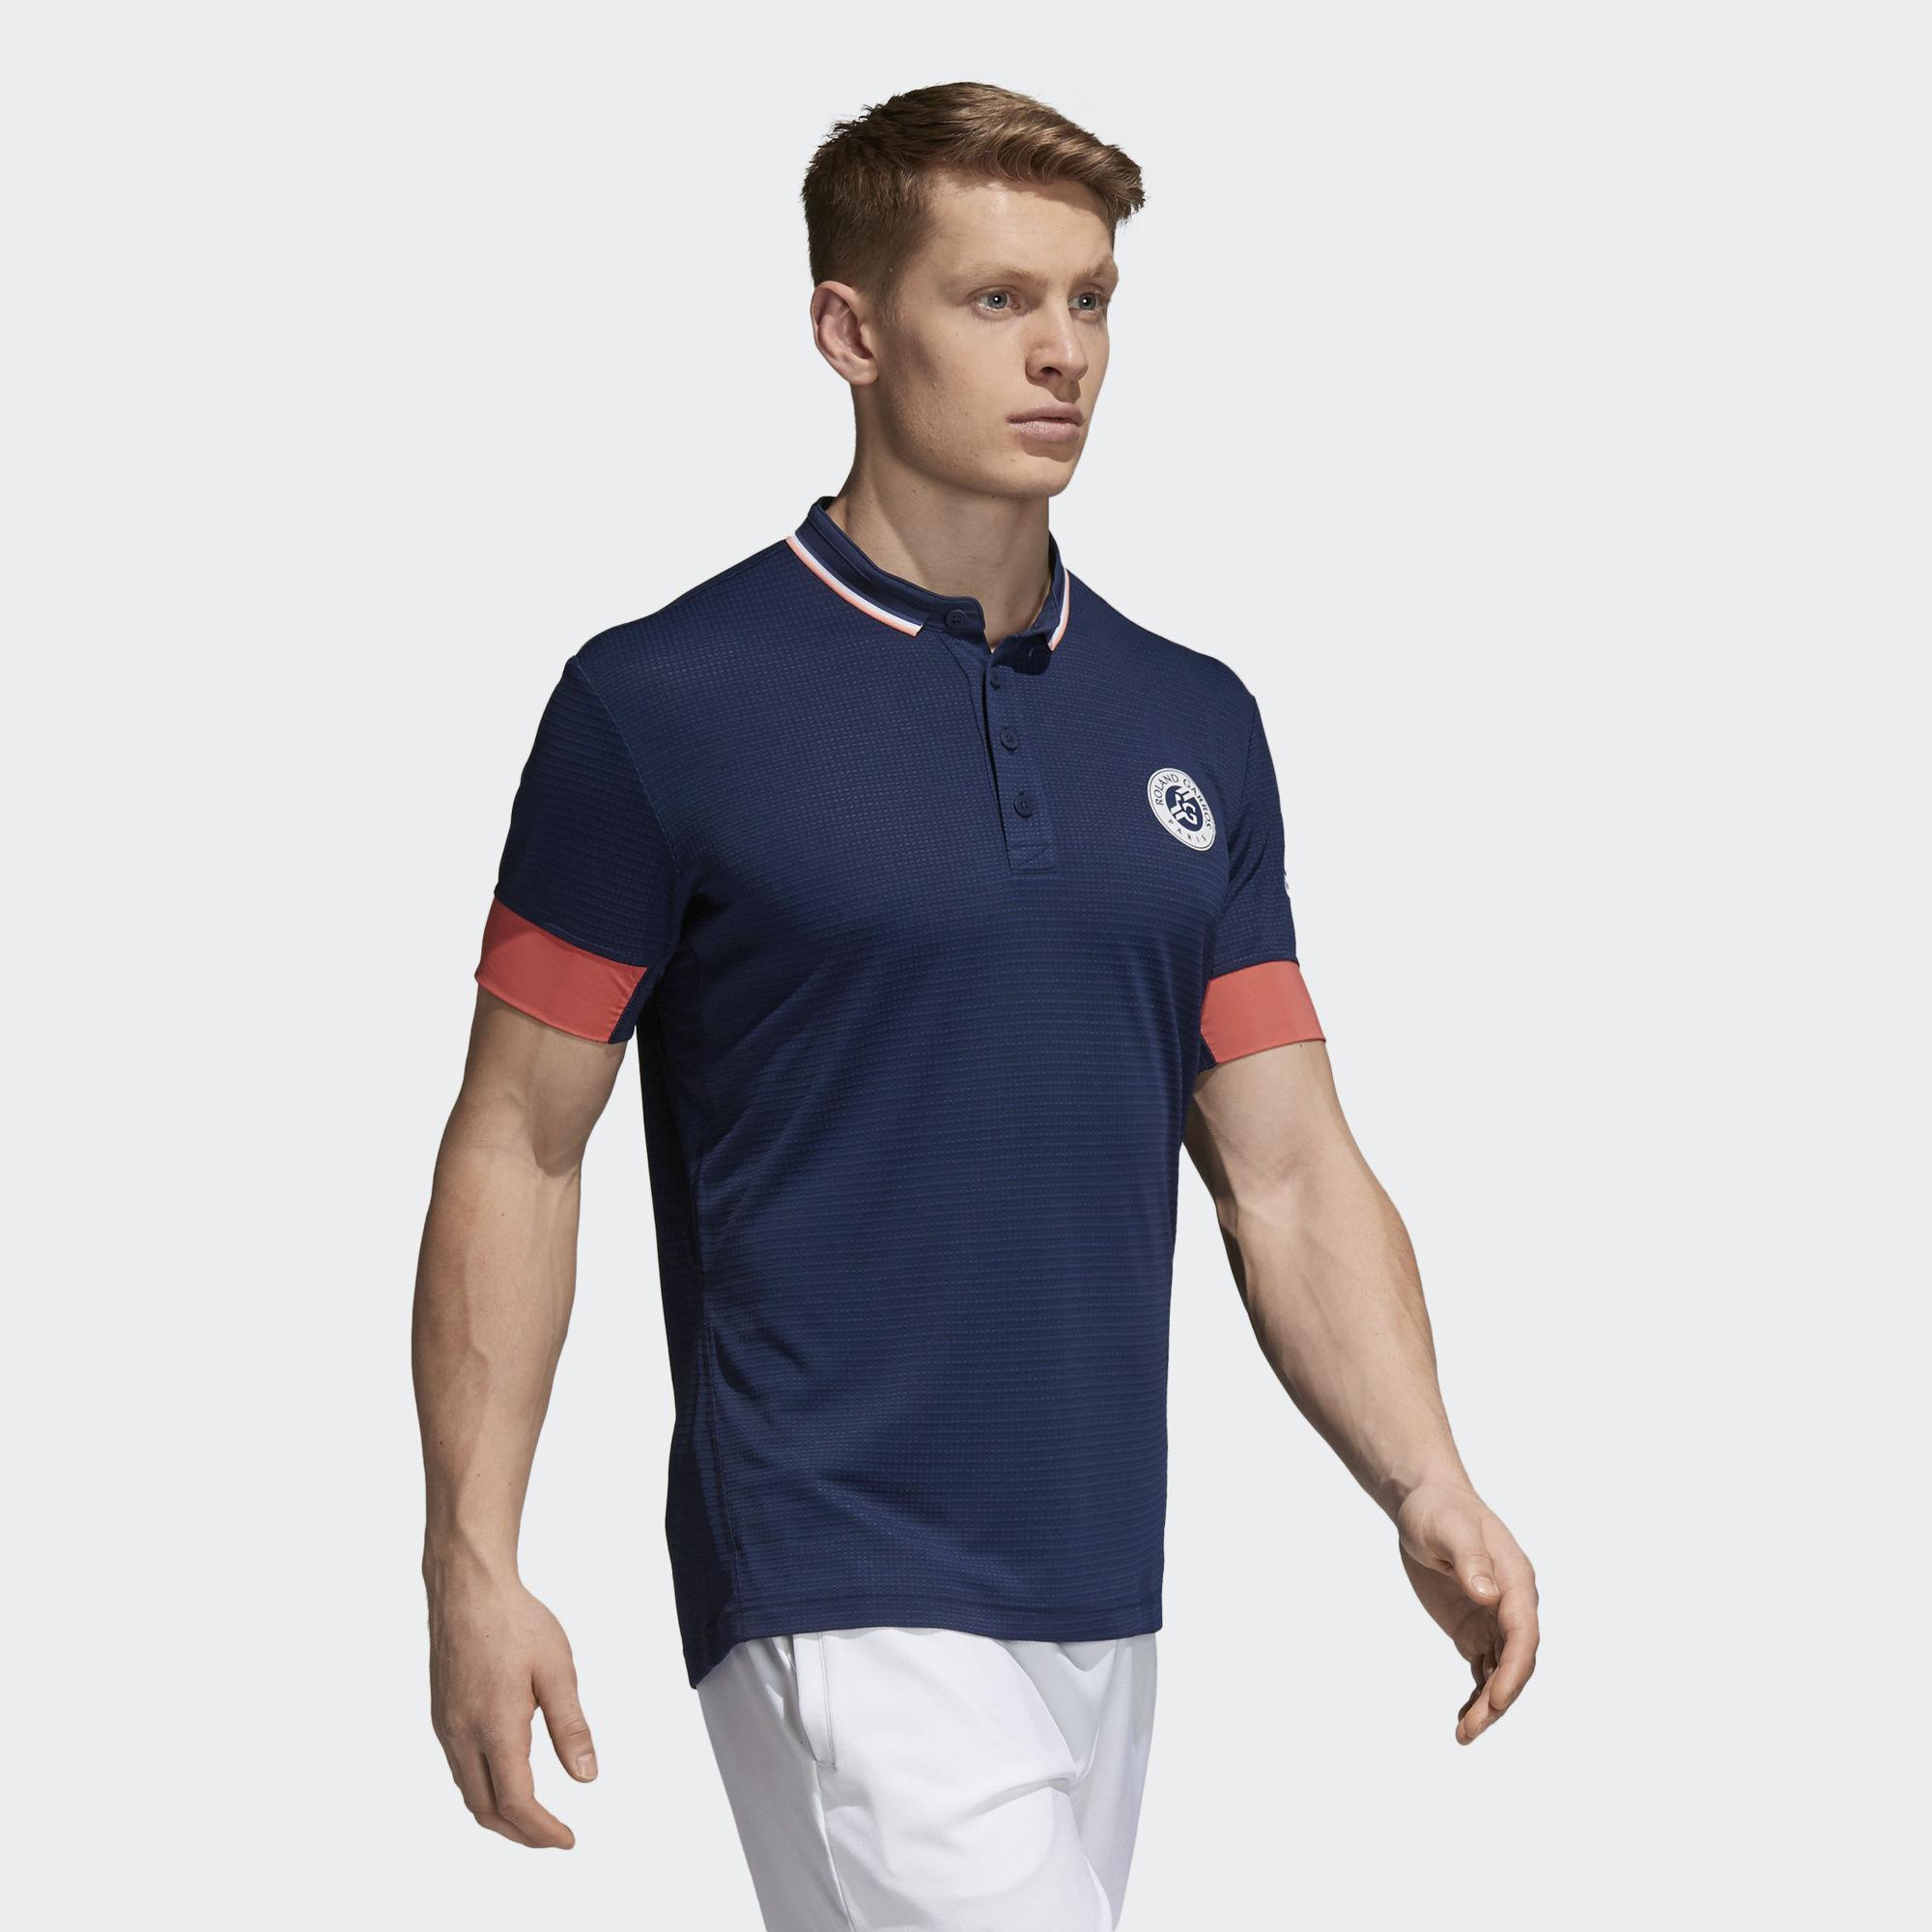 Misión emulsión toda la vida Adidas Mens Roland Garros Climachill Polo Shirt - Navy - Tennisnuts.com